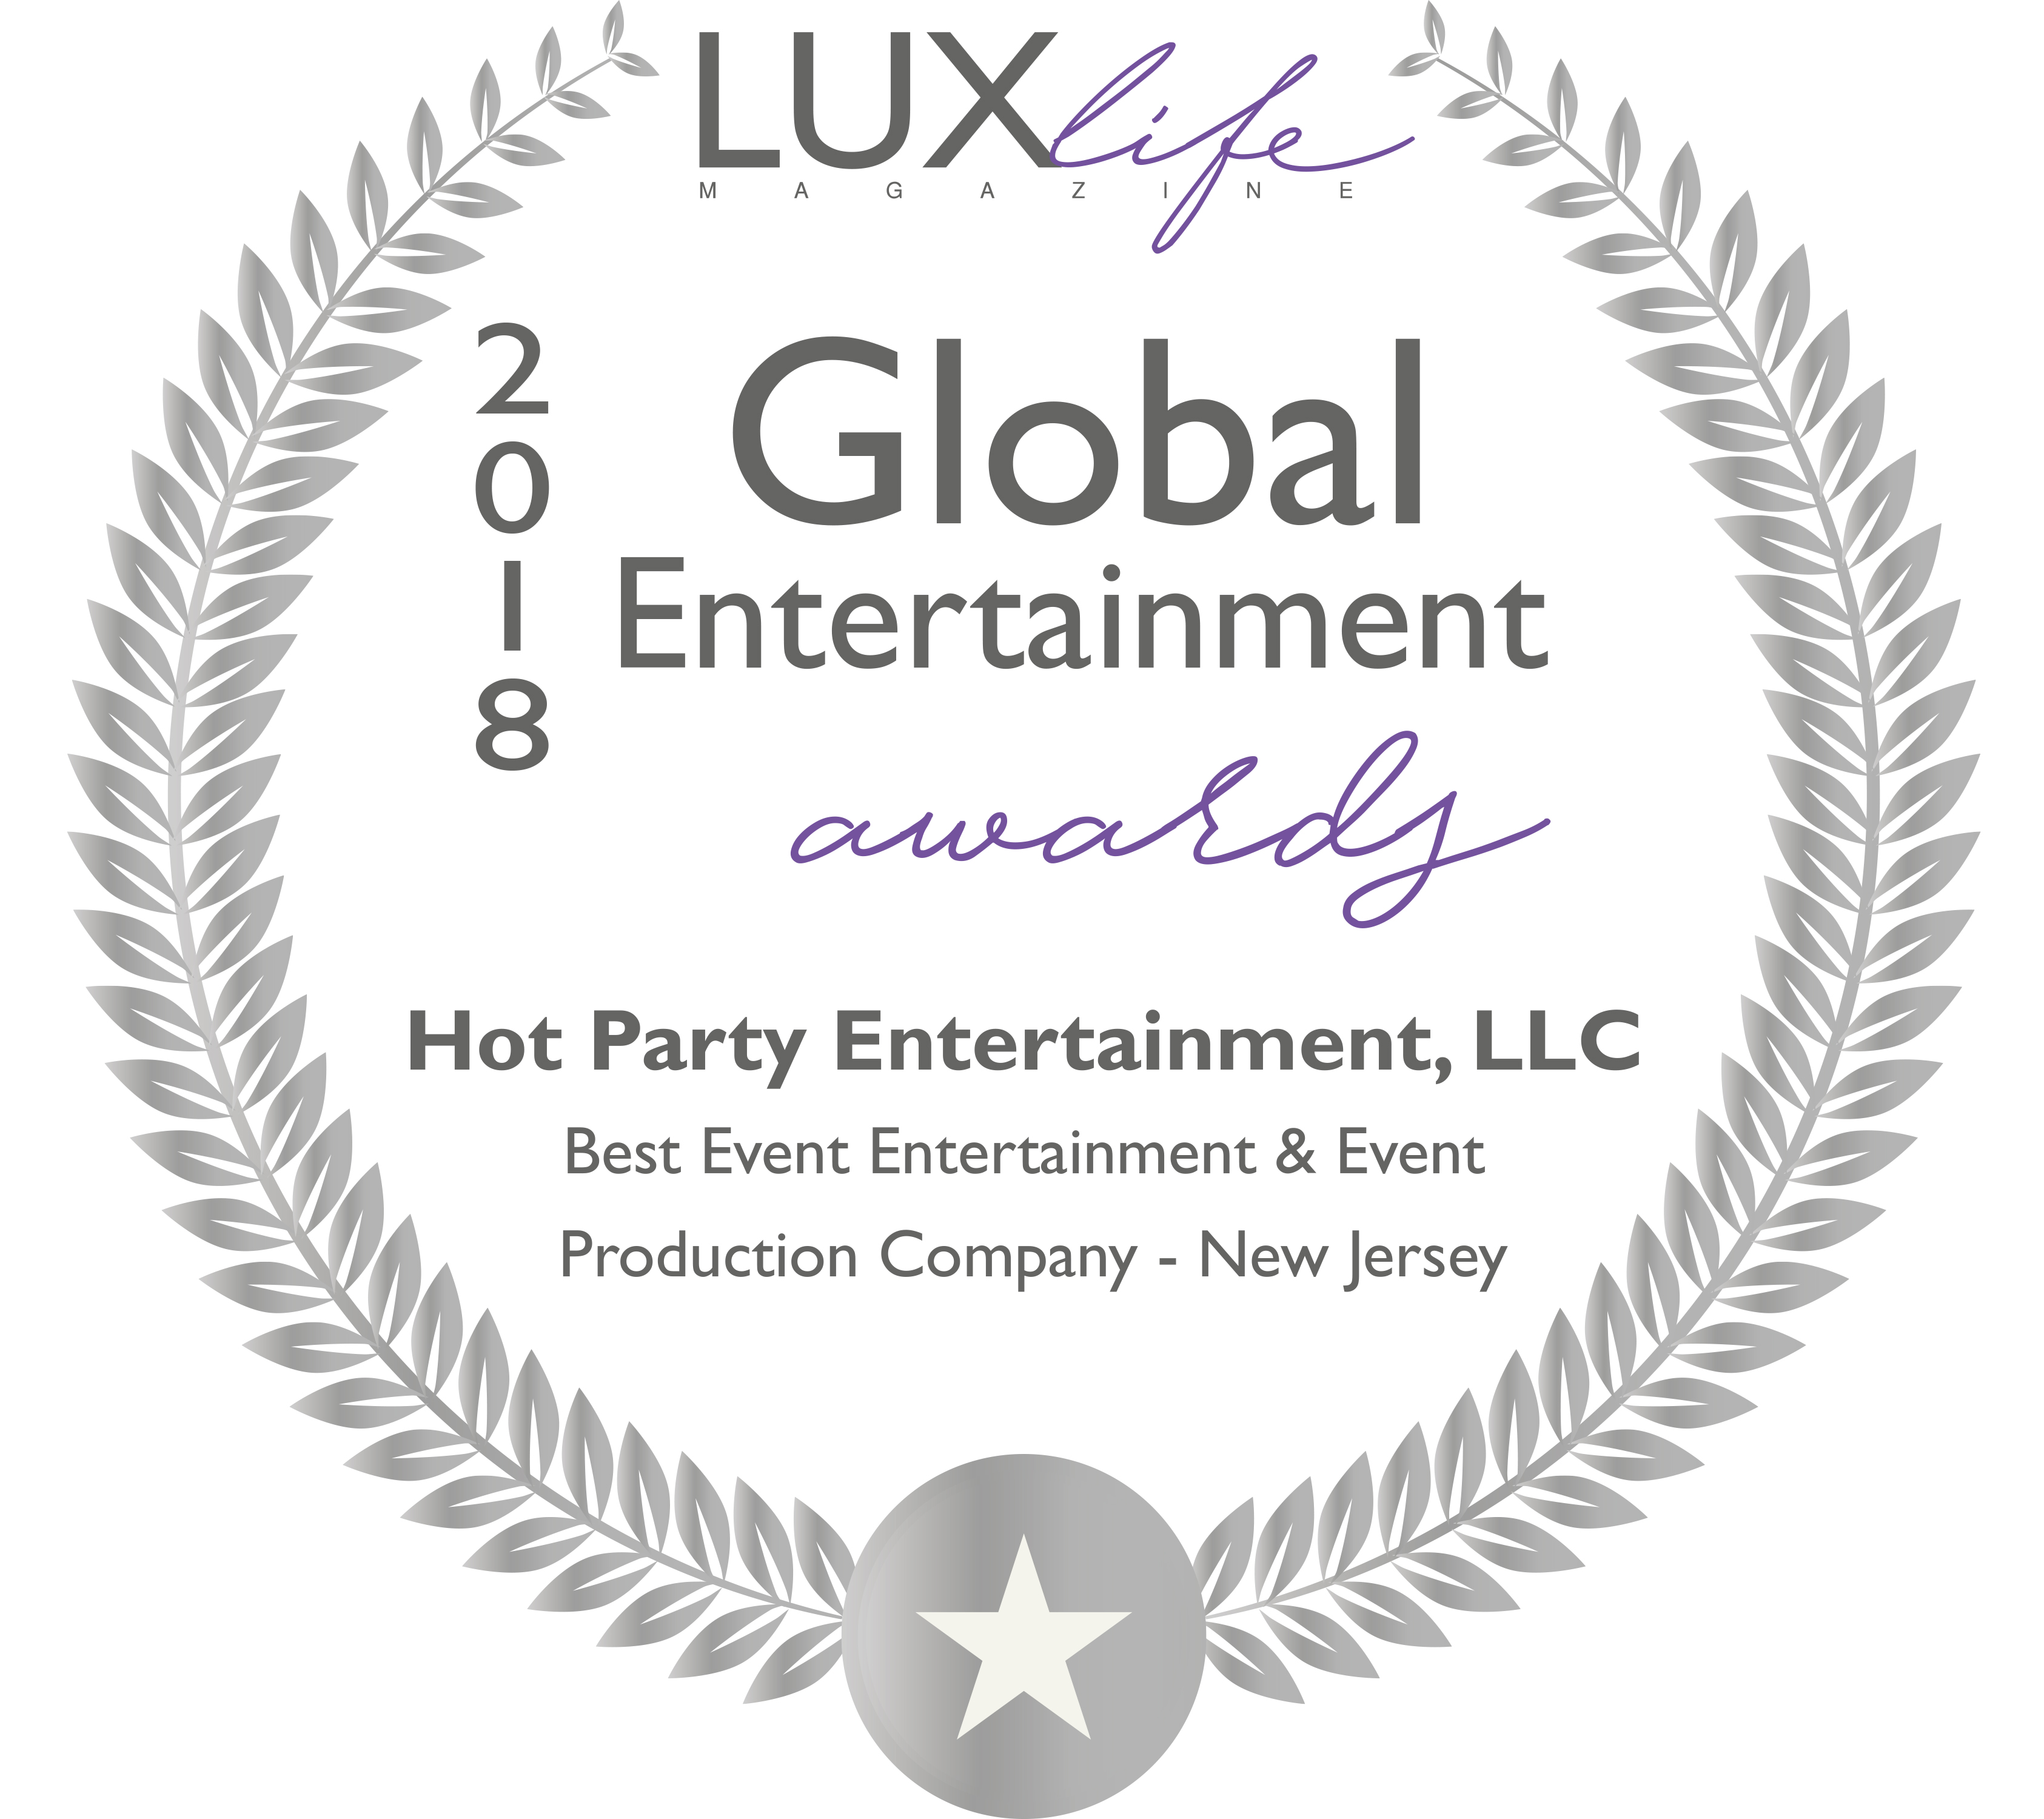 ENT18024-LUX GLOBAL ENTERTAINMENT Award  Winners Logo.jpg